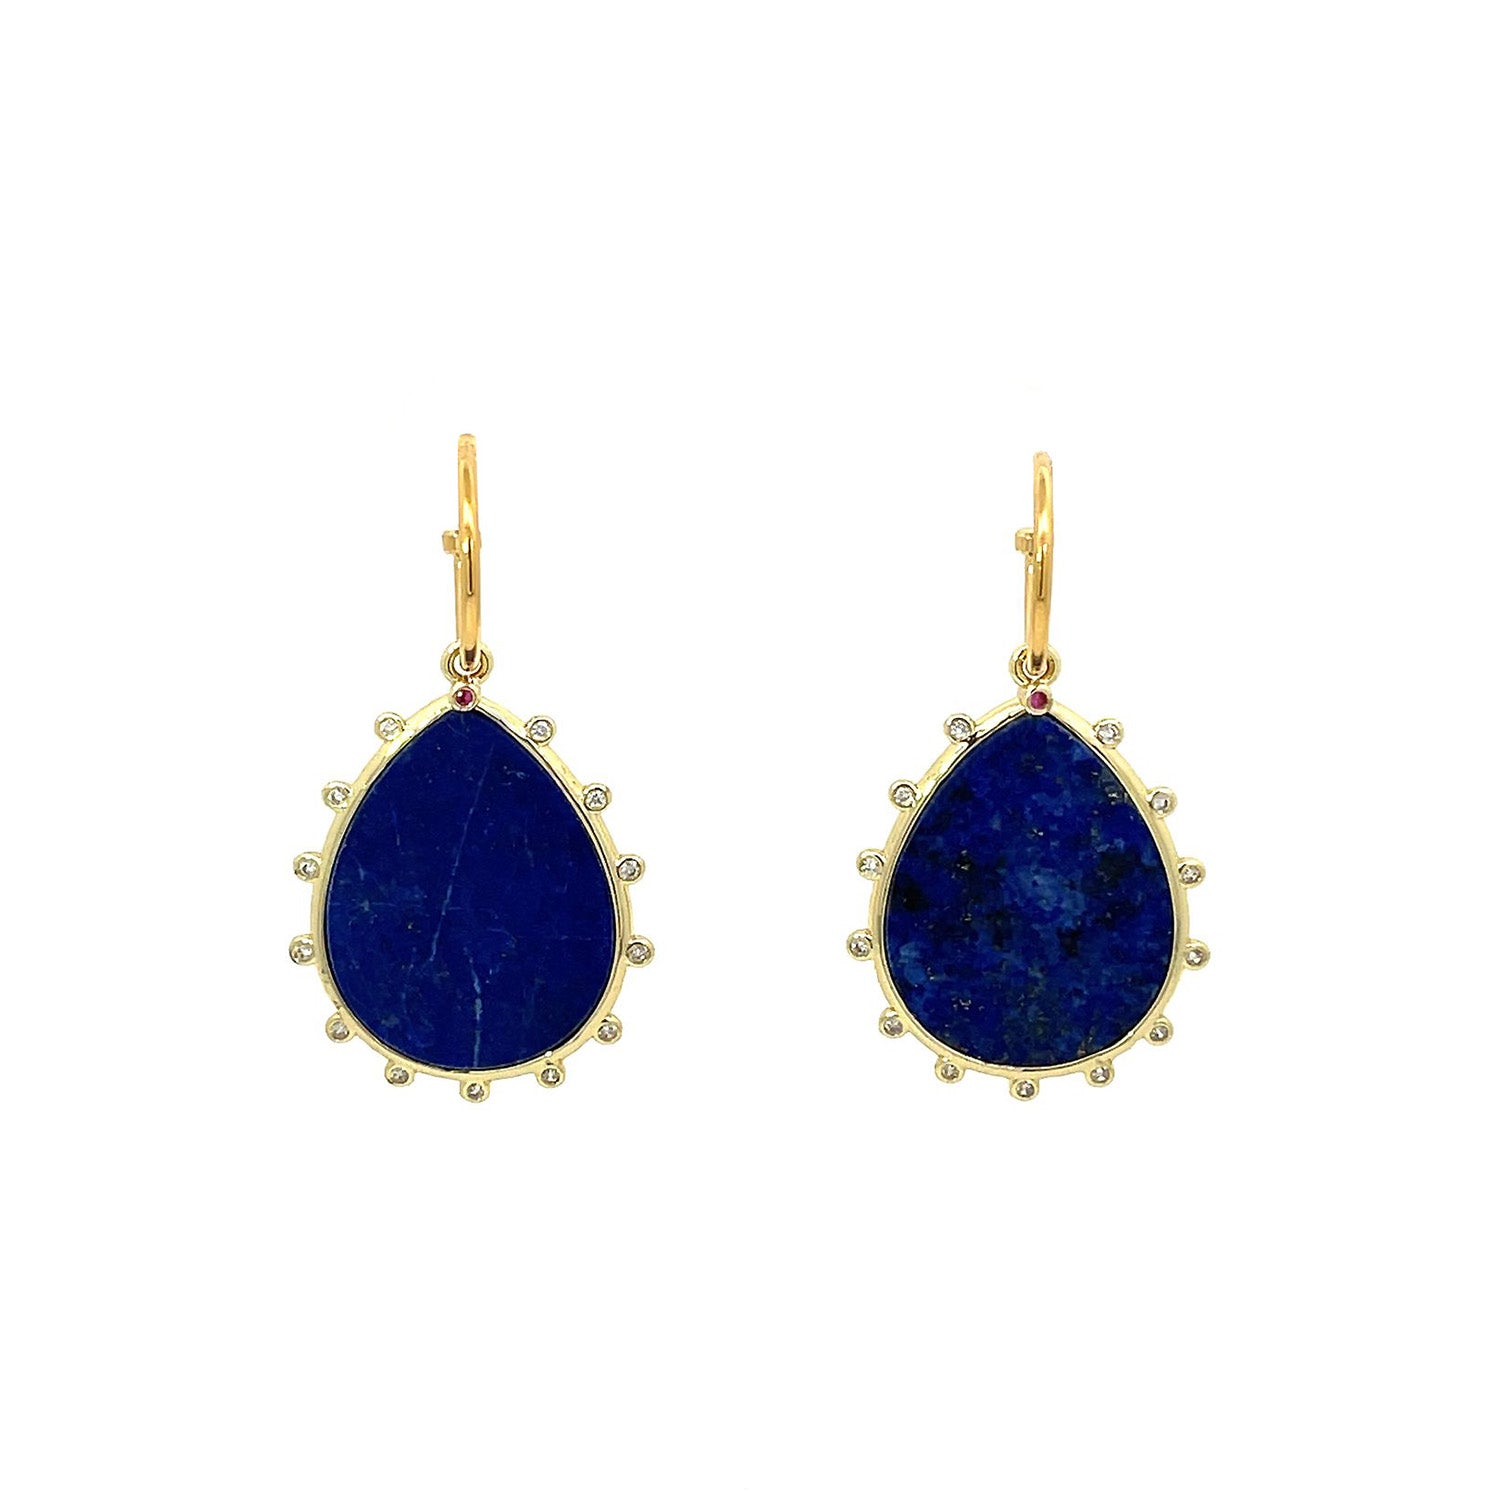 Exquisite Lapis Lazuli Drop Earrings by Gosia Orlowska